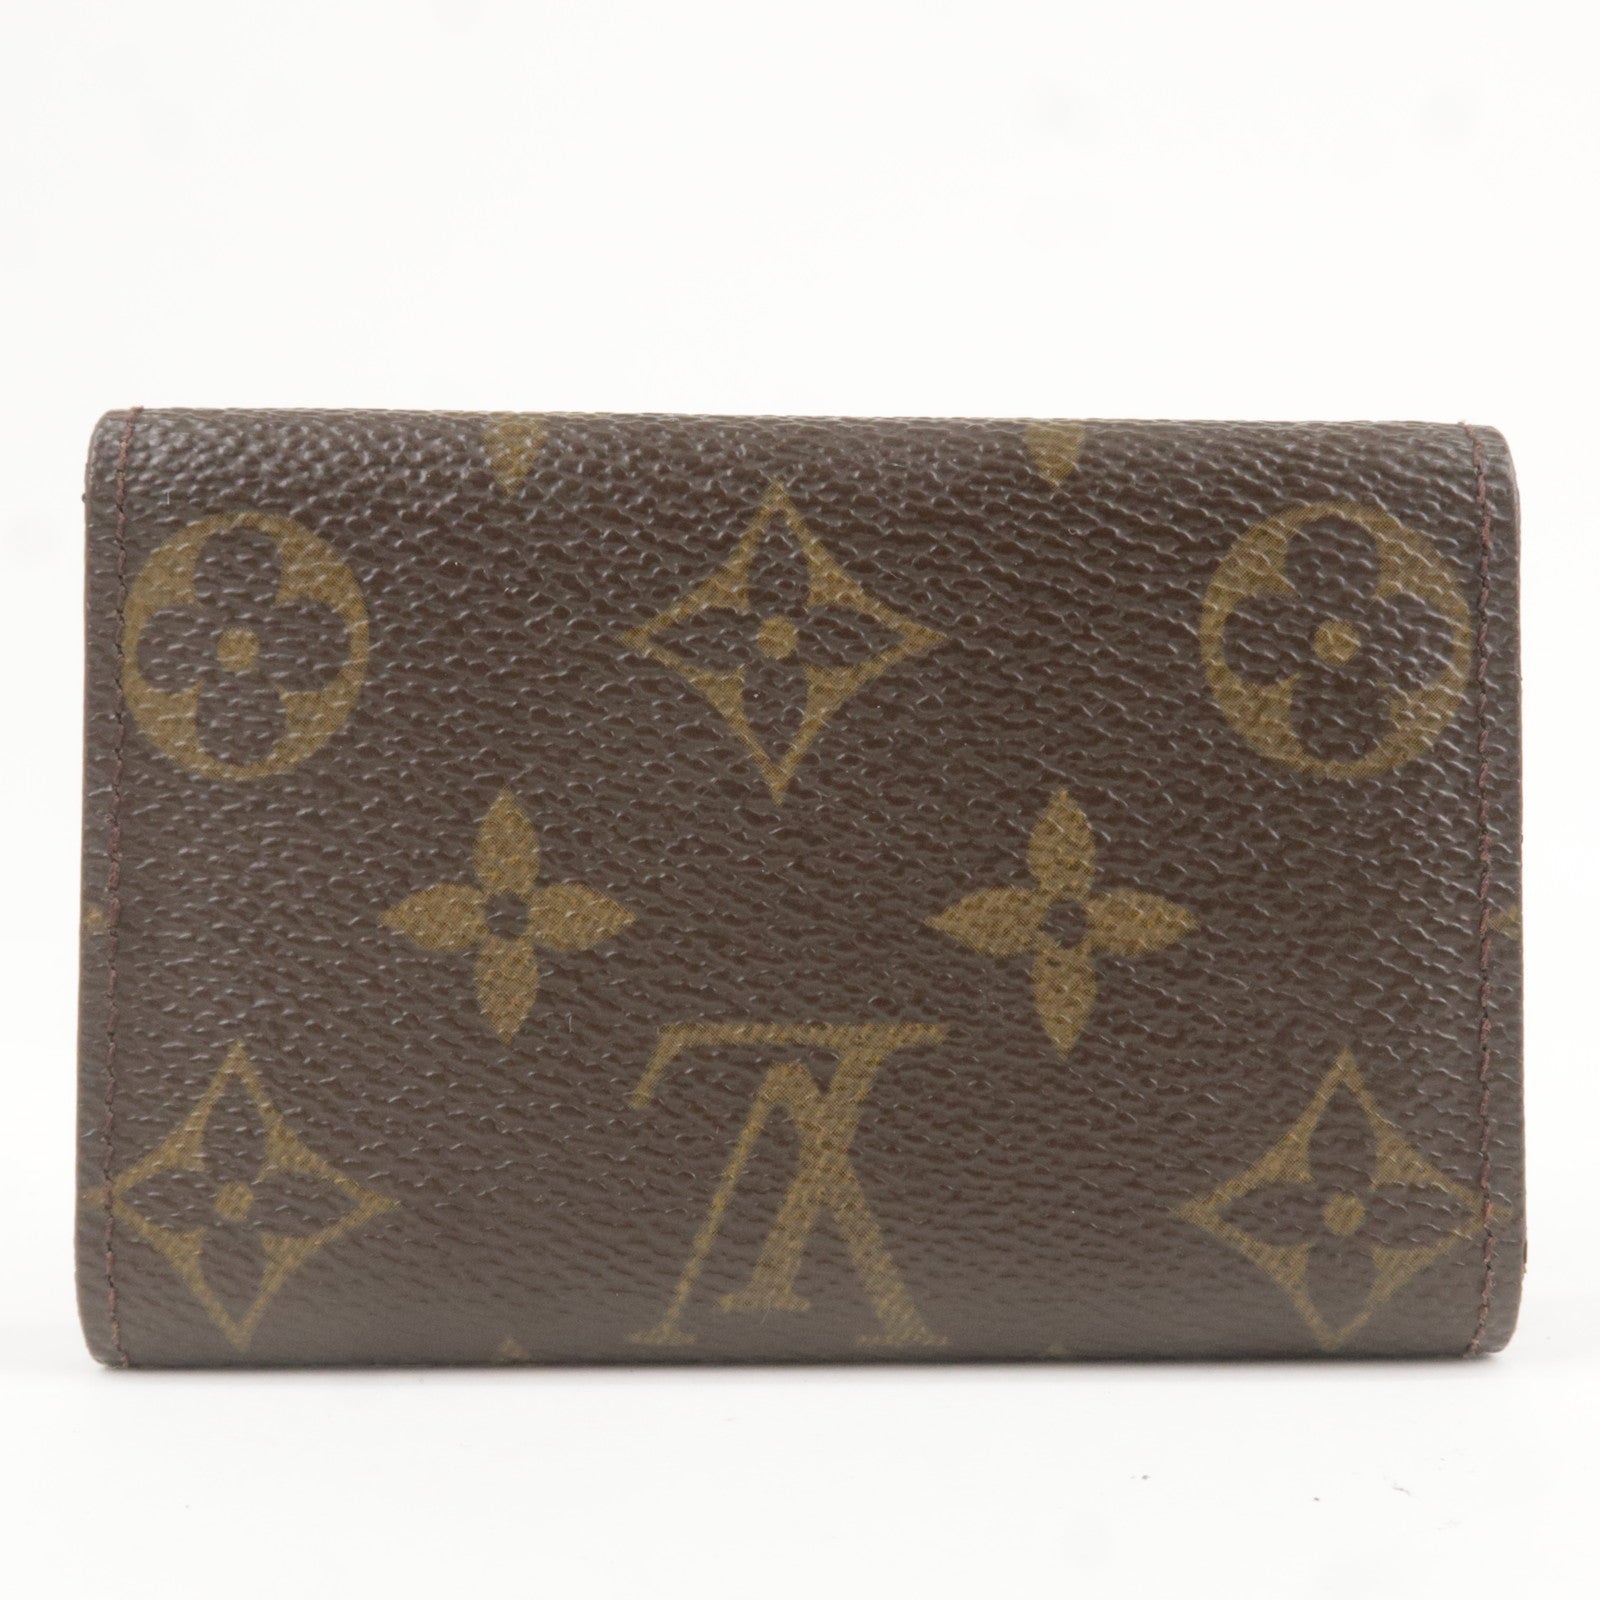 Shop Louis Vuitton MONOGRAM 6 key holder (M62630) by